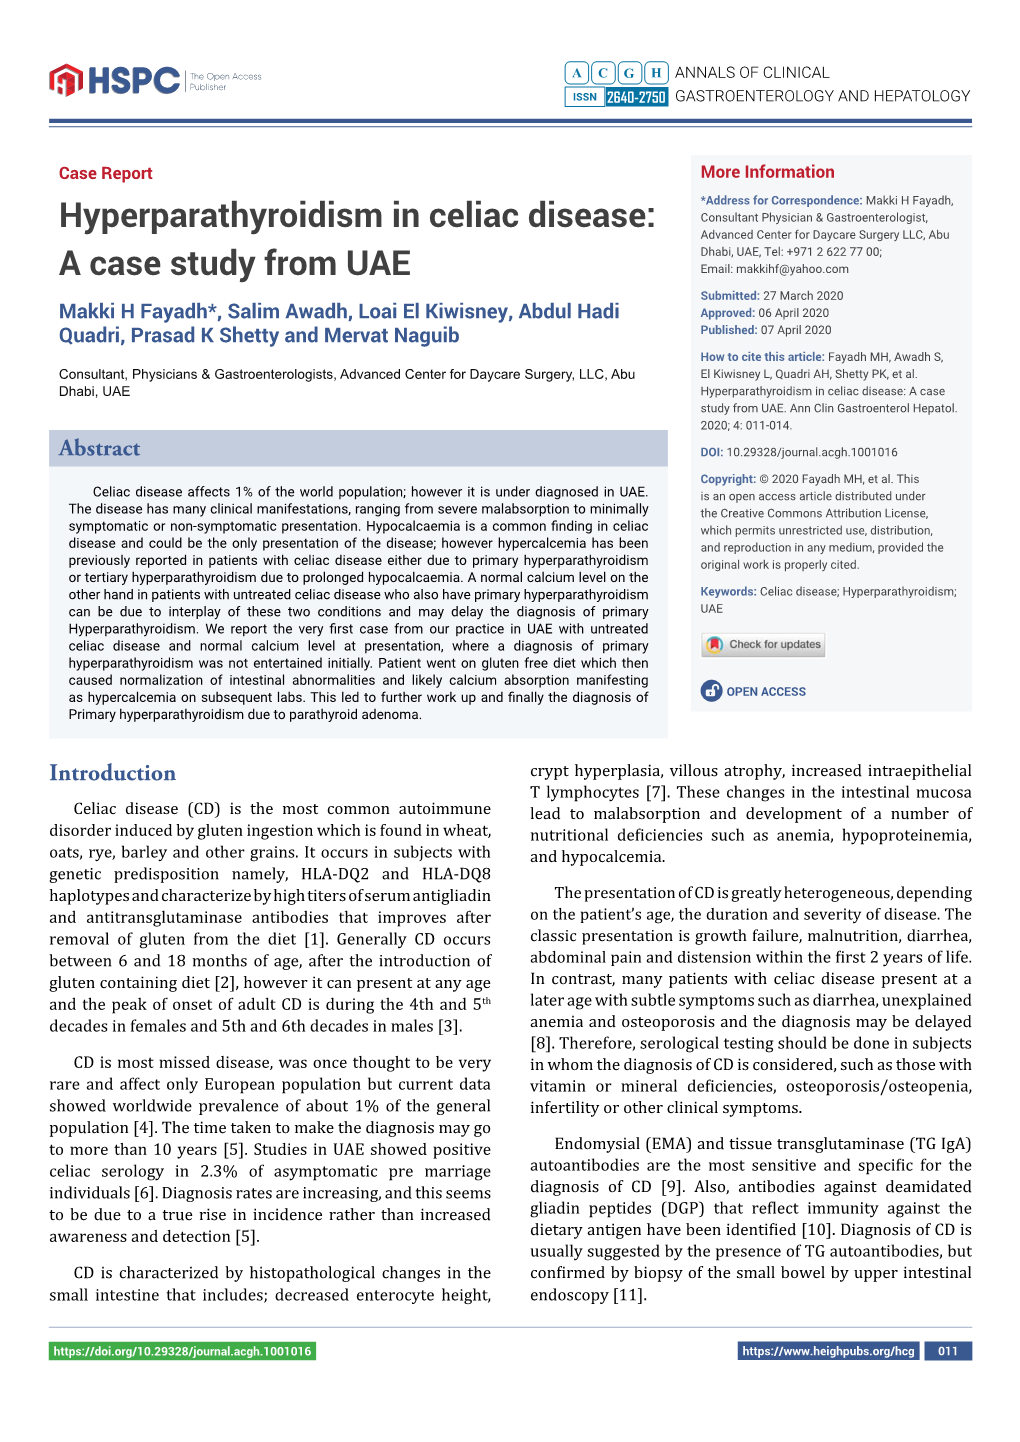 Hyperparathyroidism in Celiac Disease: a Case Study from UAE